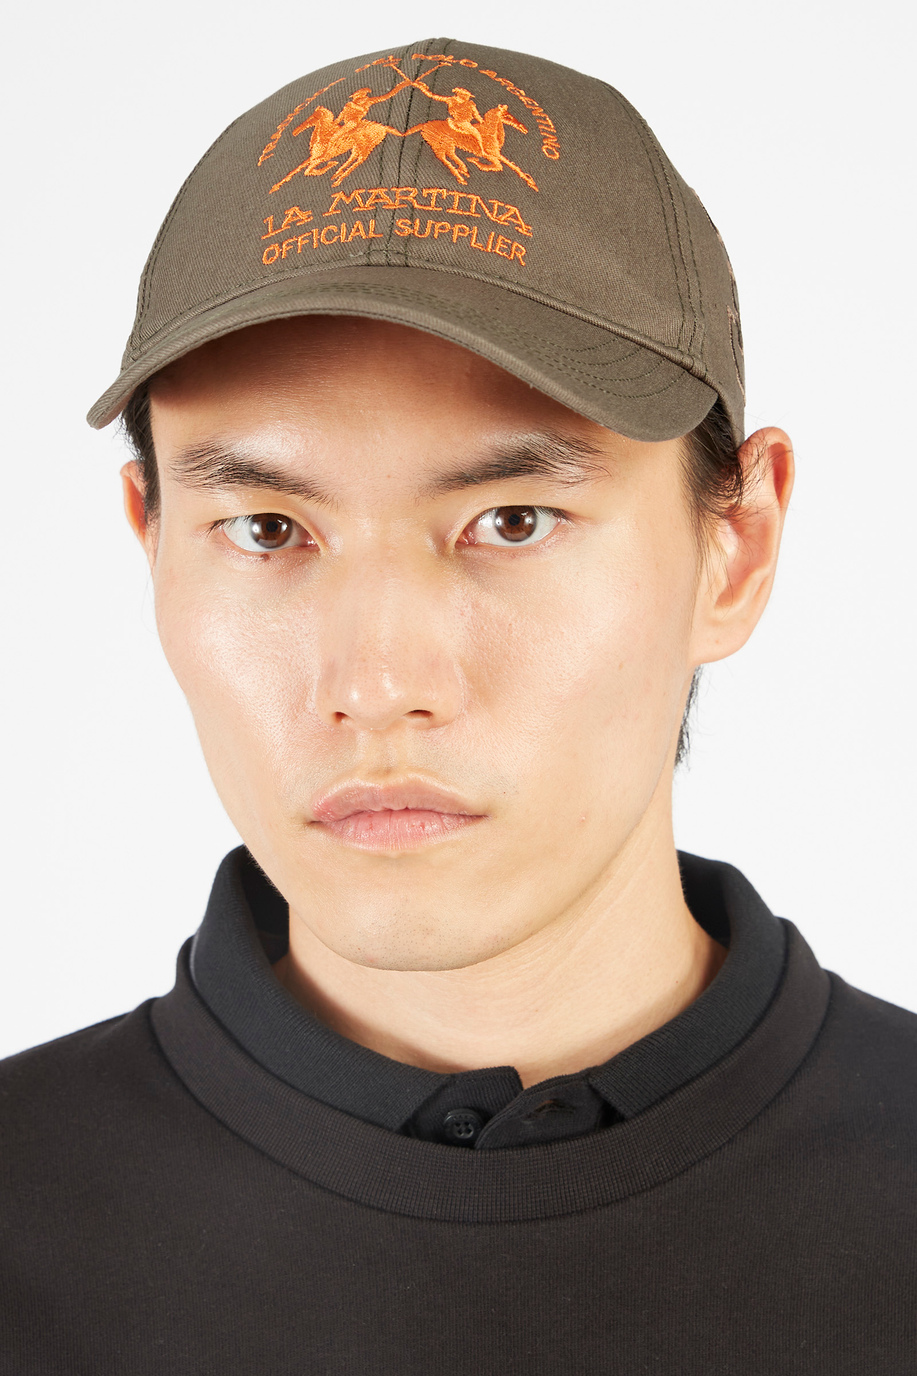 Unisex baseball cap with adjustable regular fit closure - Gifts under €75 for him | La Martina - Official Online Shop